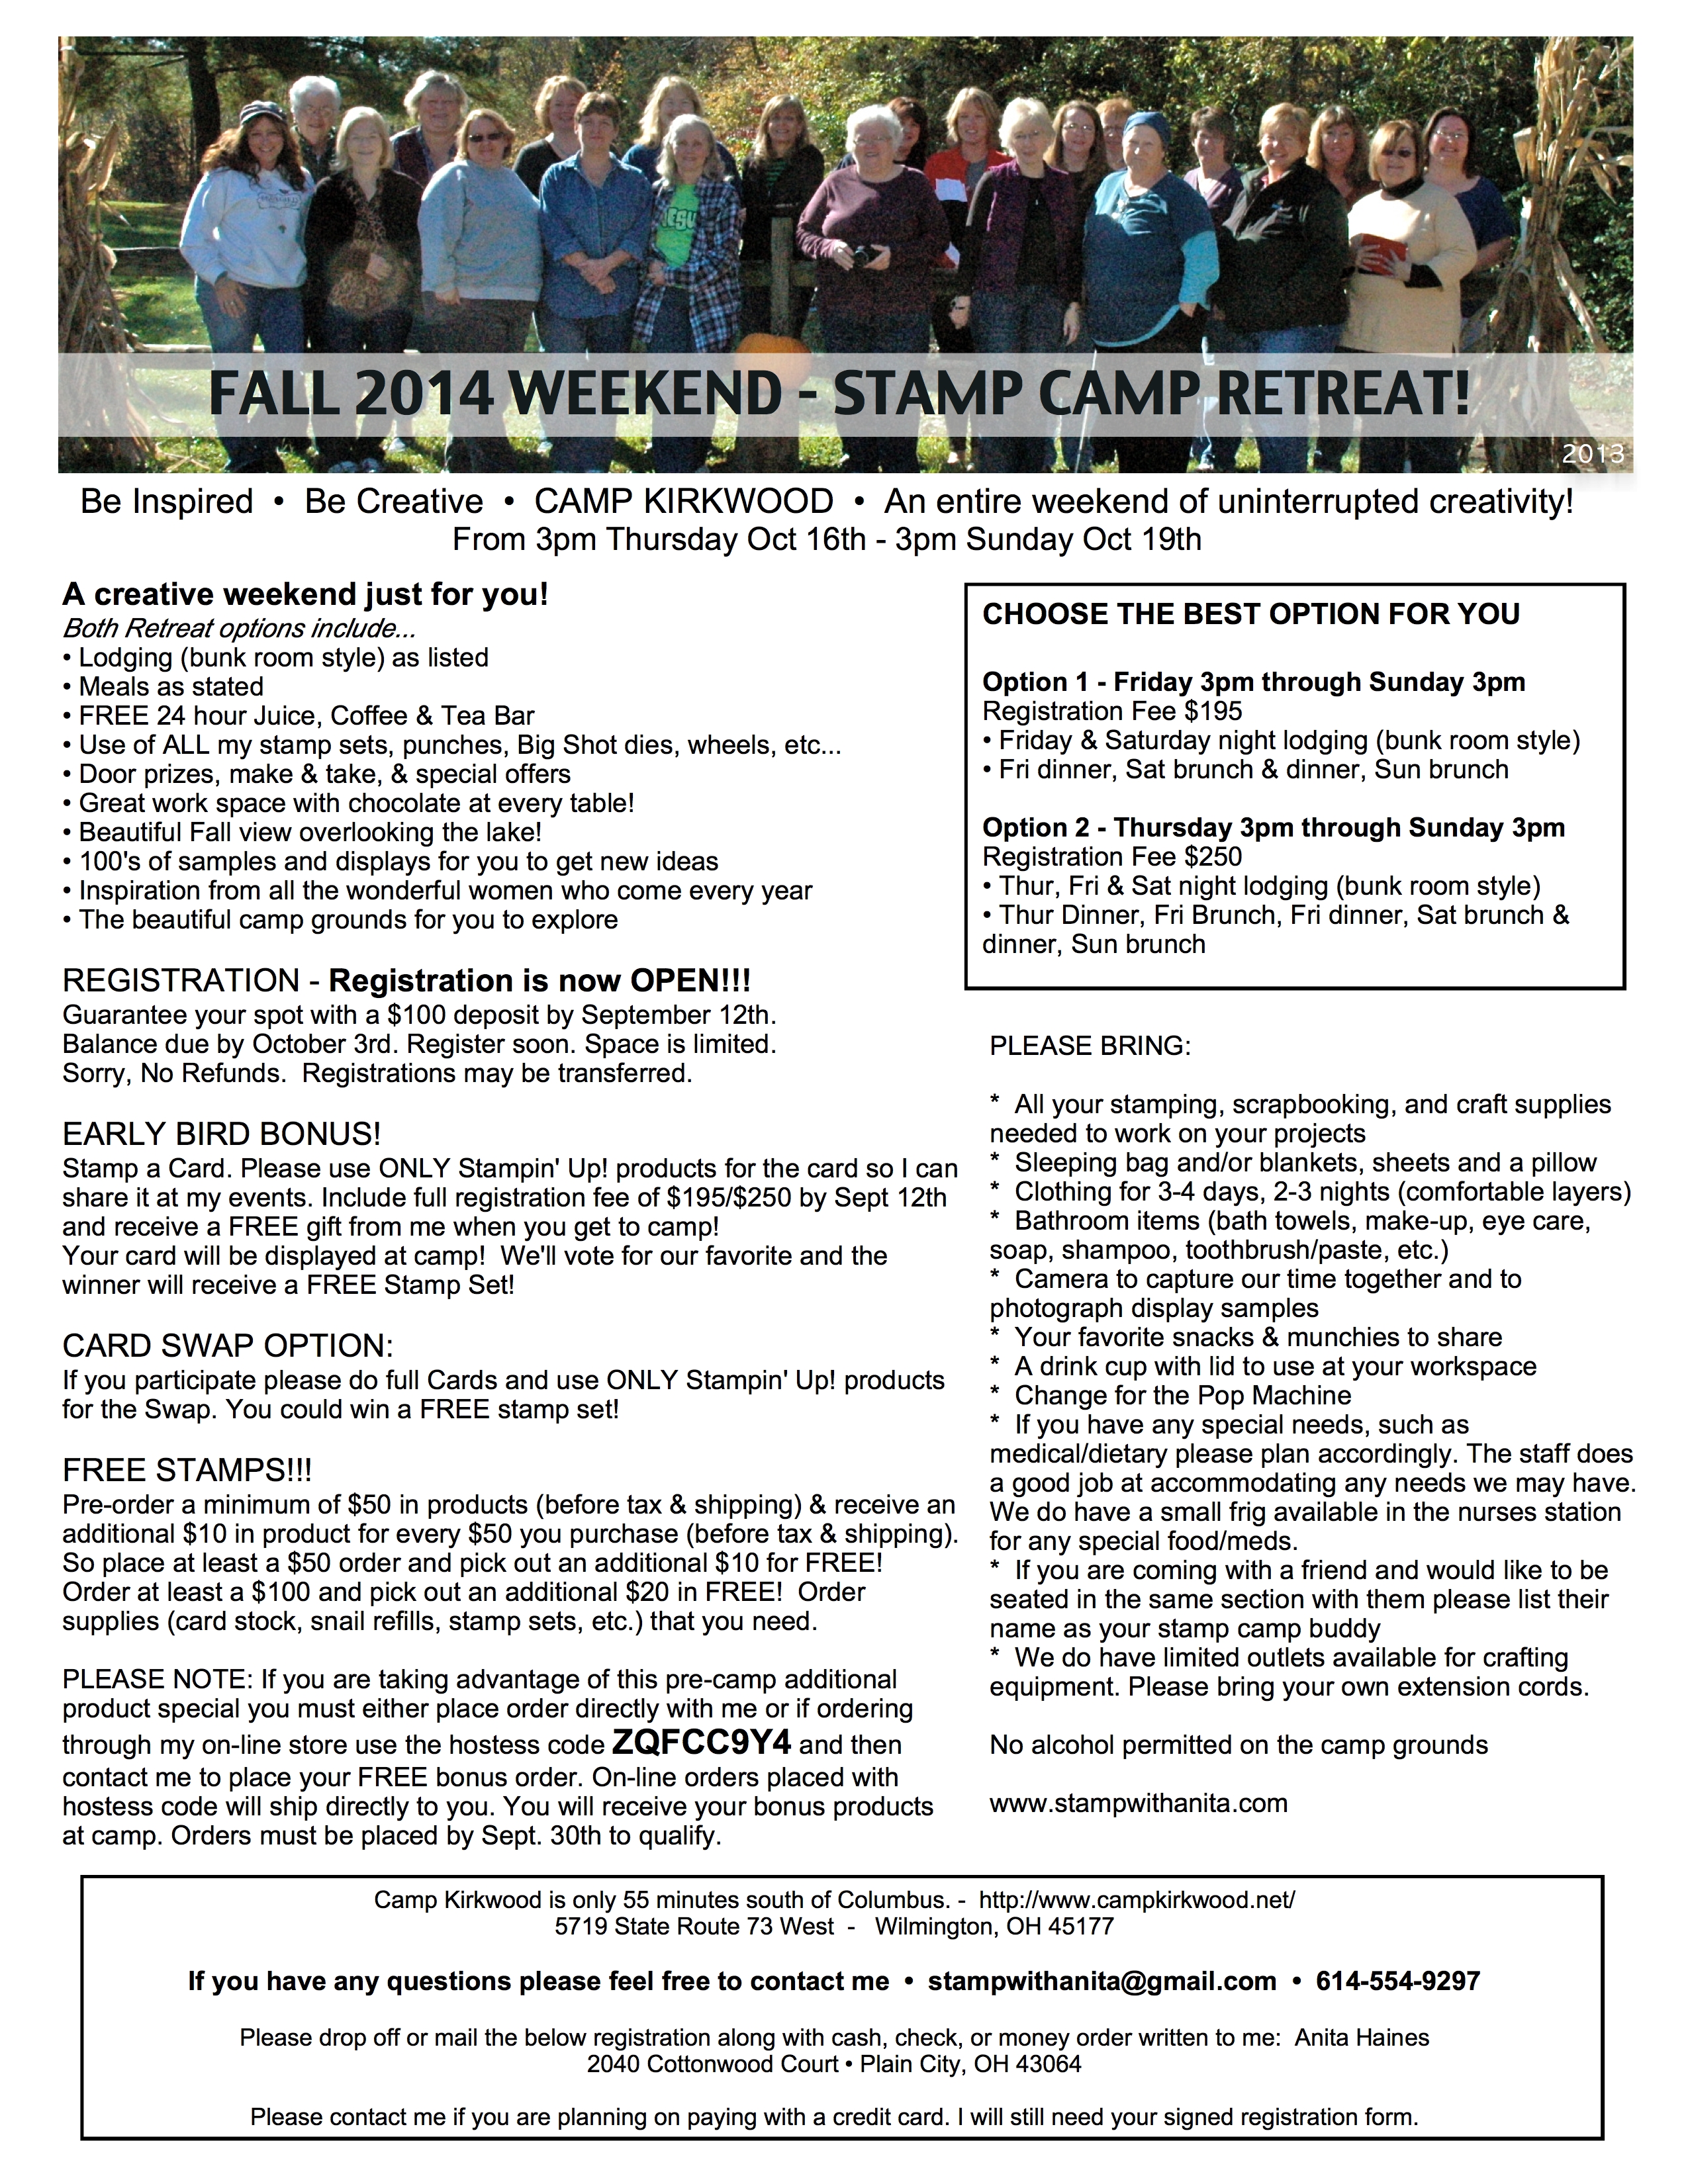 Stamp Camp 2014 Info_www.stampwithanita.com